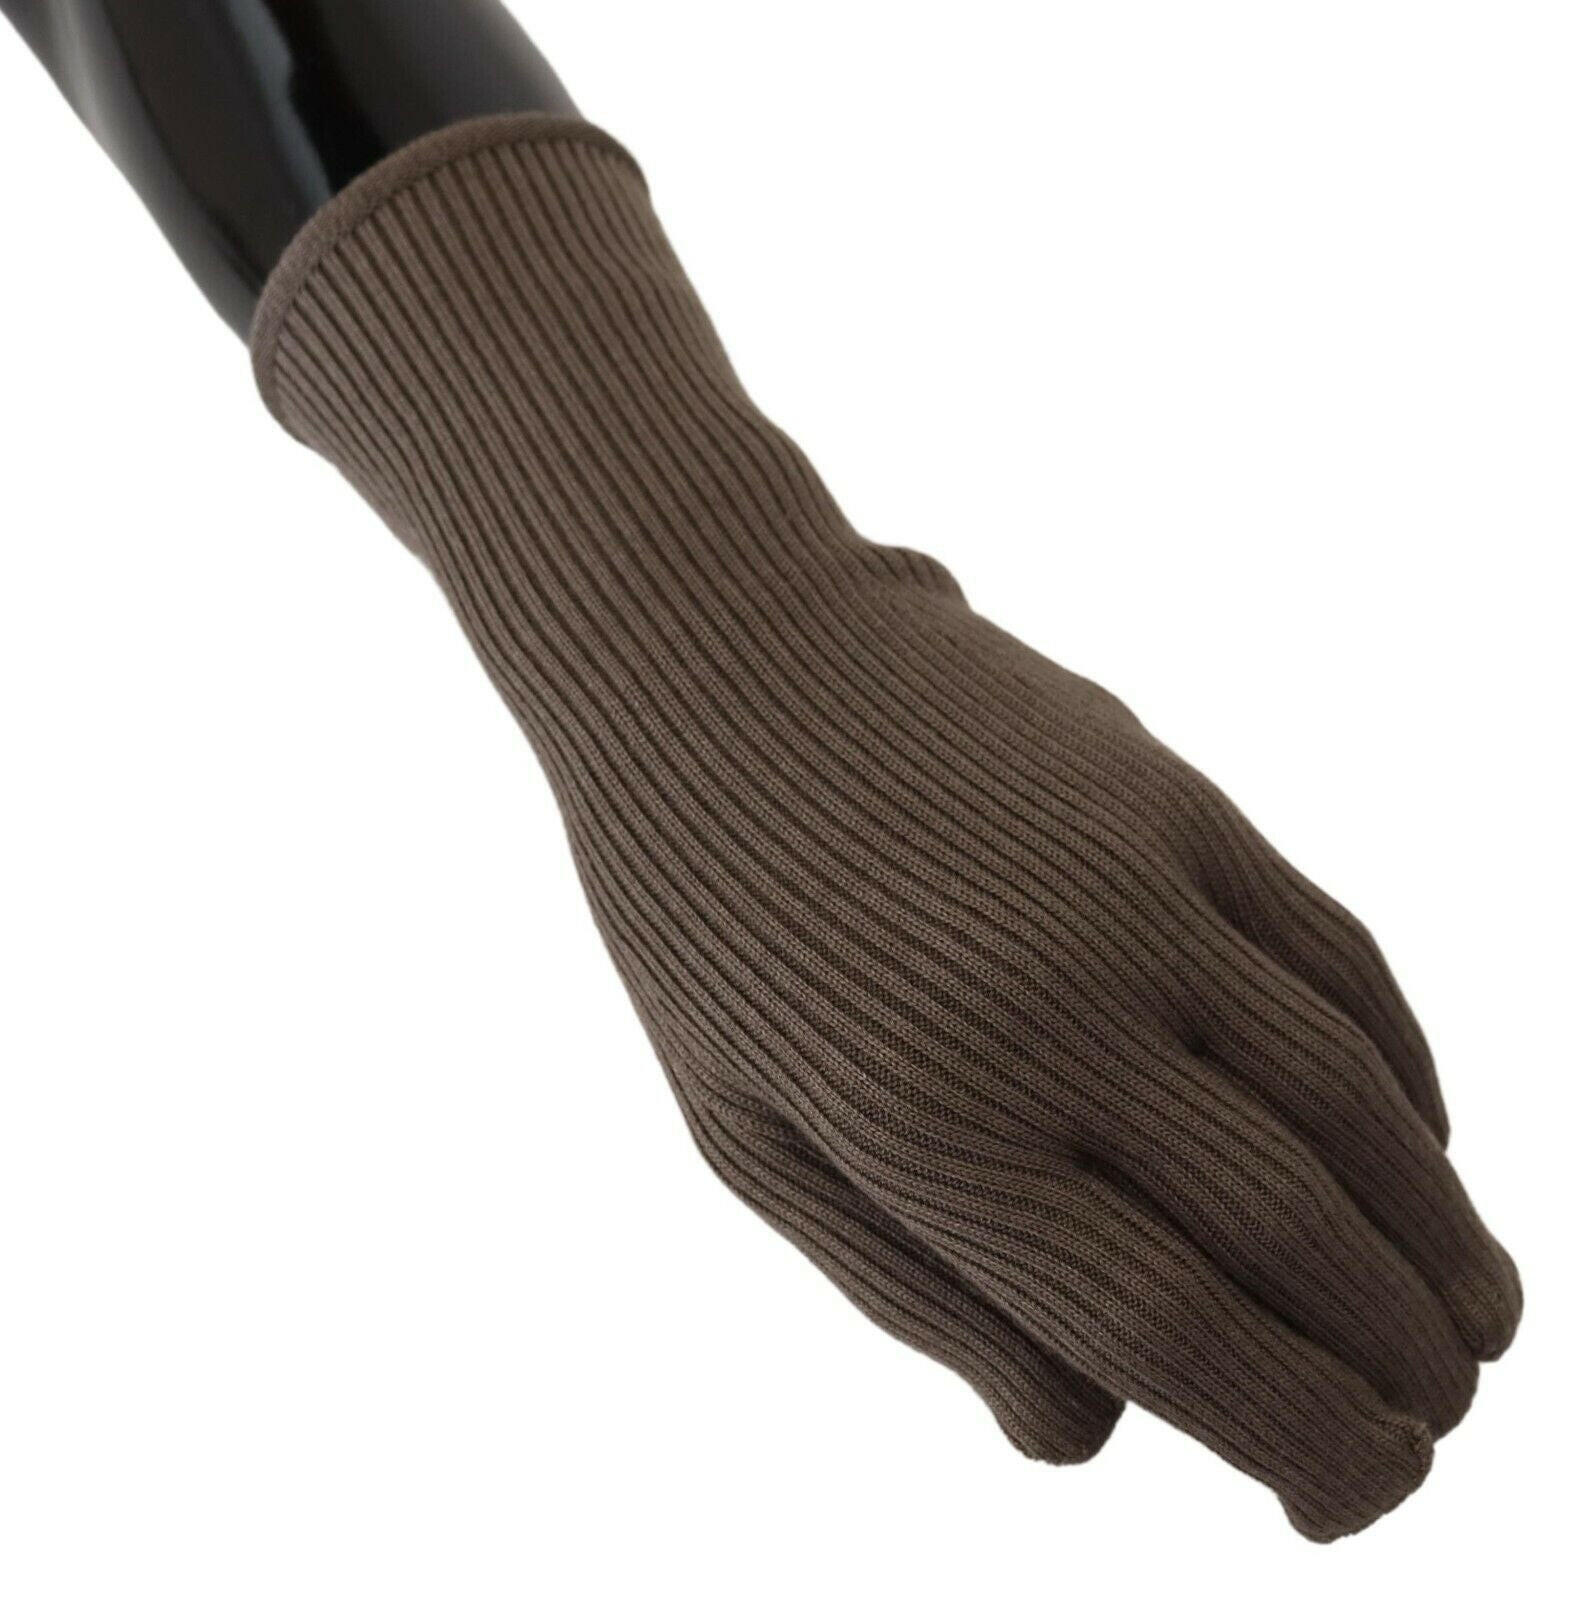 Dolce & Gabbana Gray Cashmere knitted Hands Mitten Mens Gloves - GENUINE AUTHENTIC BRAND LLC  